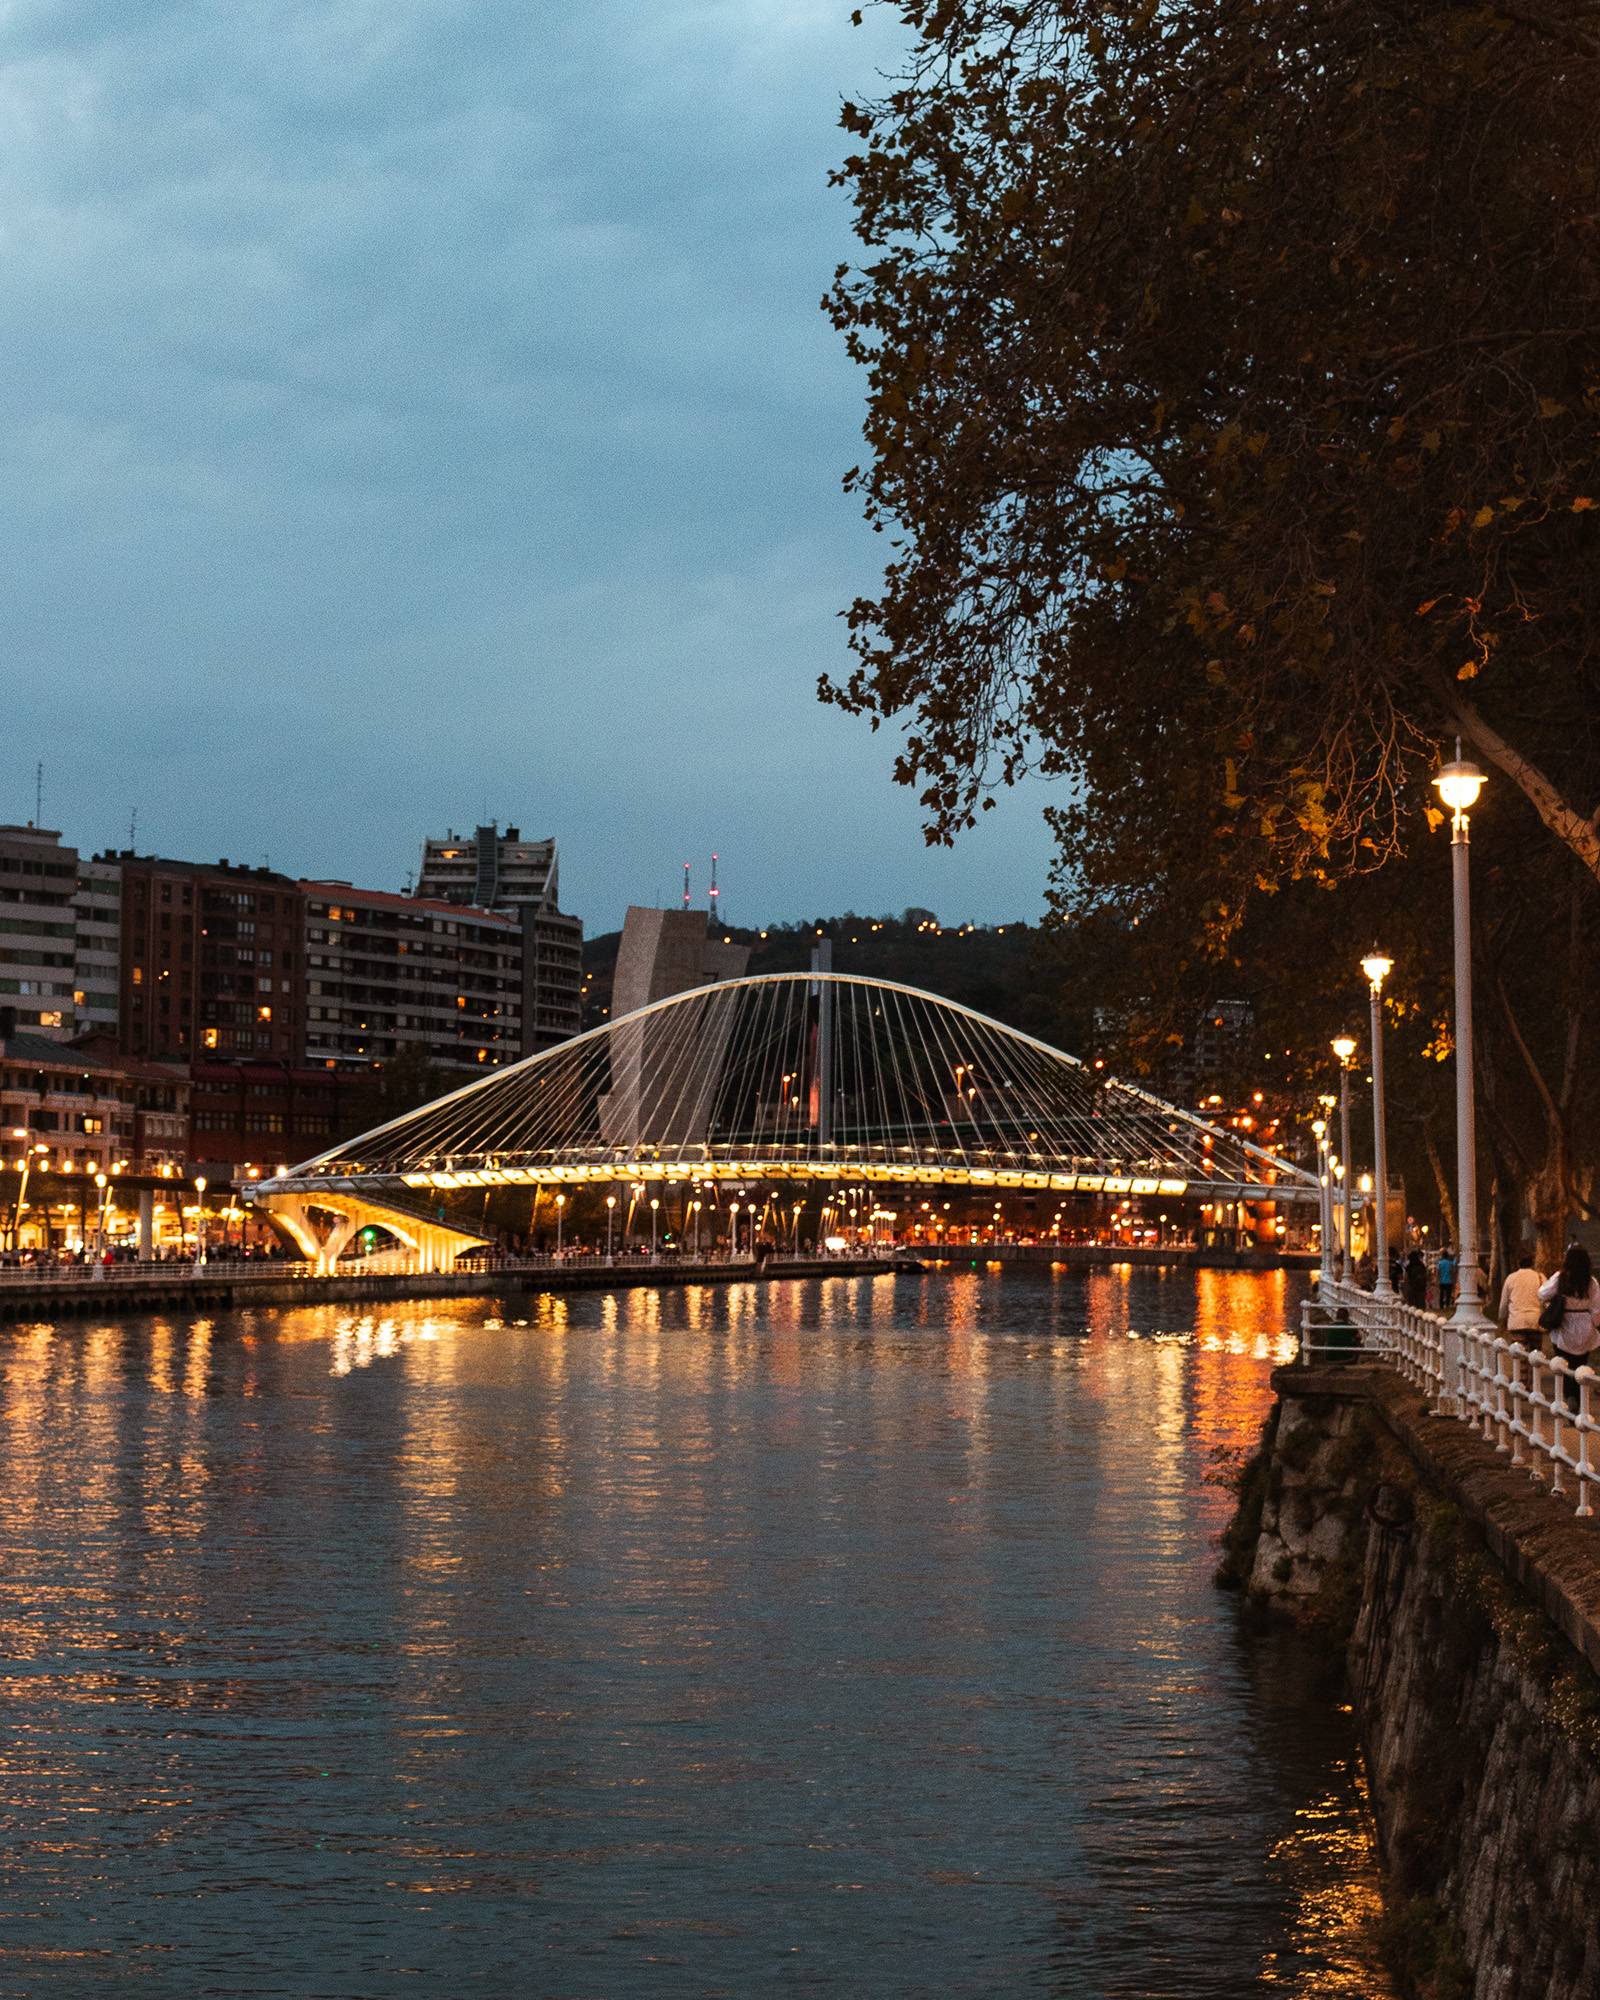 Zubizuri bridge in Bilbao at night